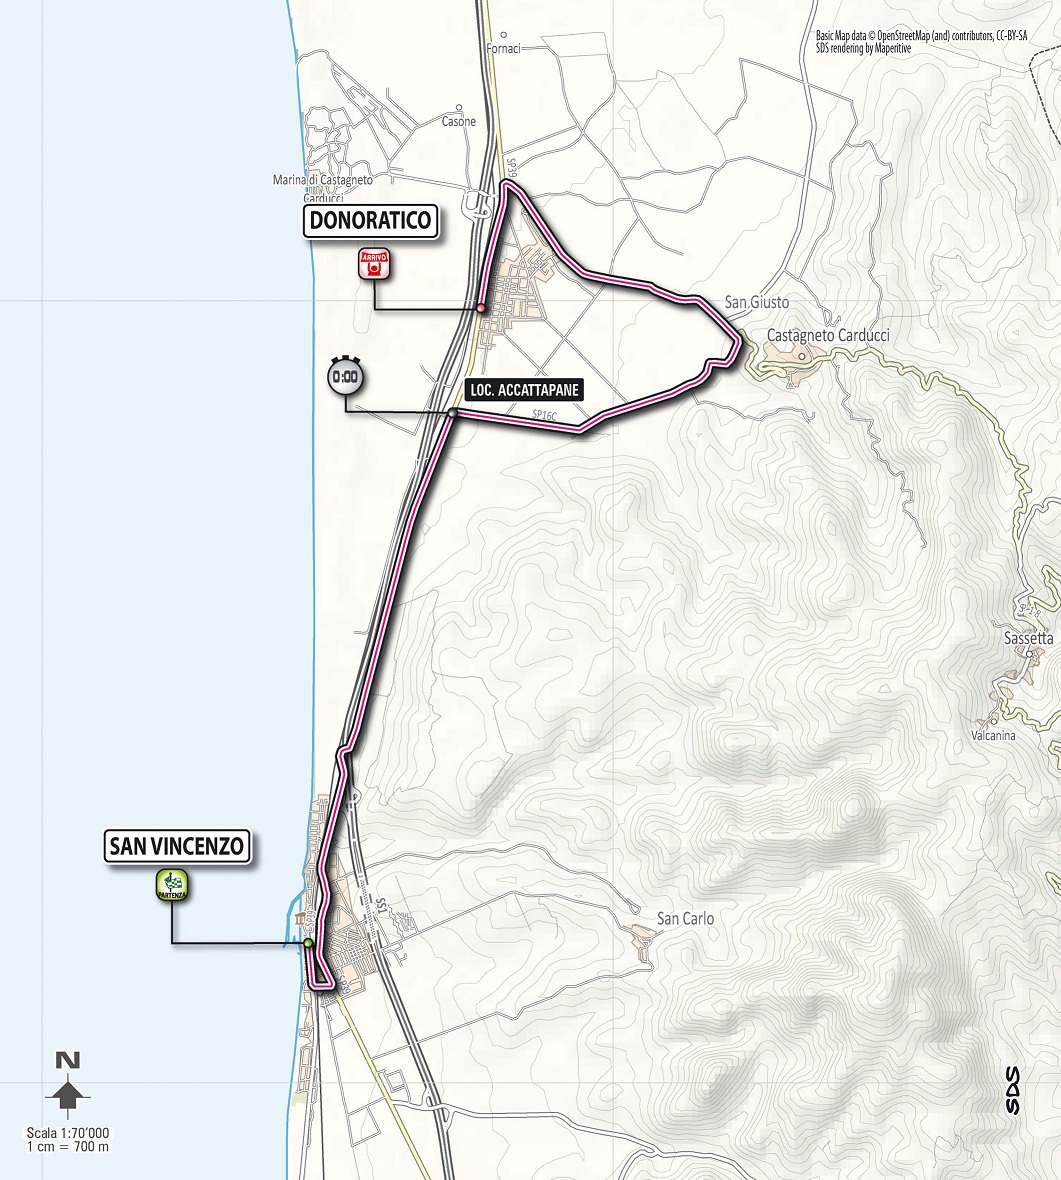 Streckenverlauf Tirreno - Adriatico 2013 - Etappe 1